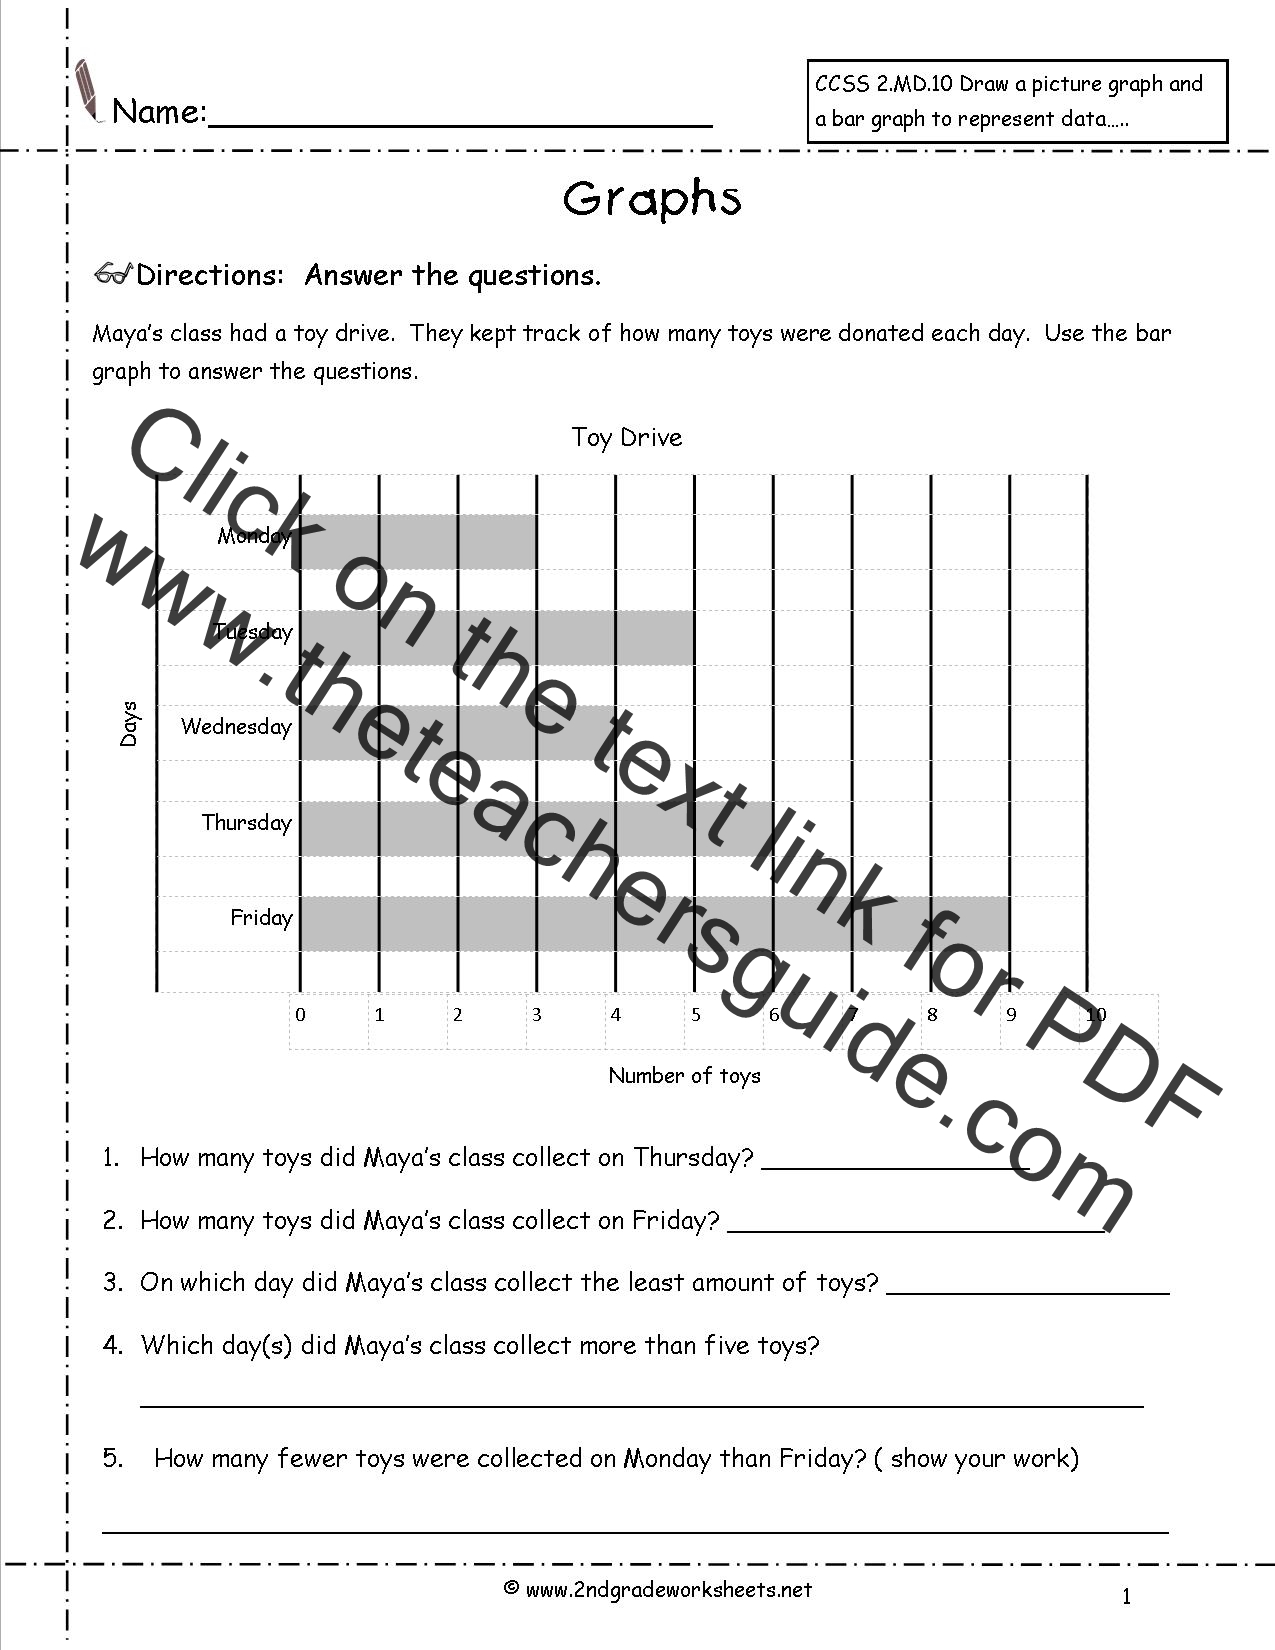 Free Graphs And Charts Worksheets